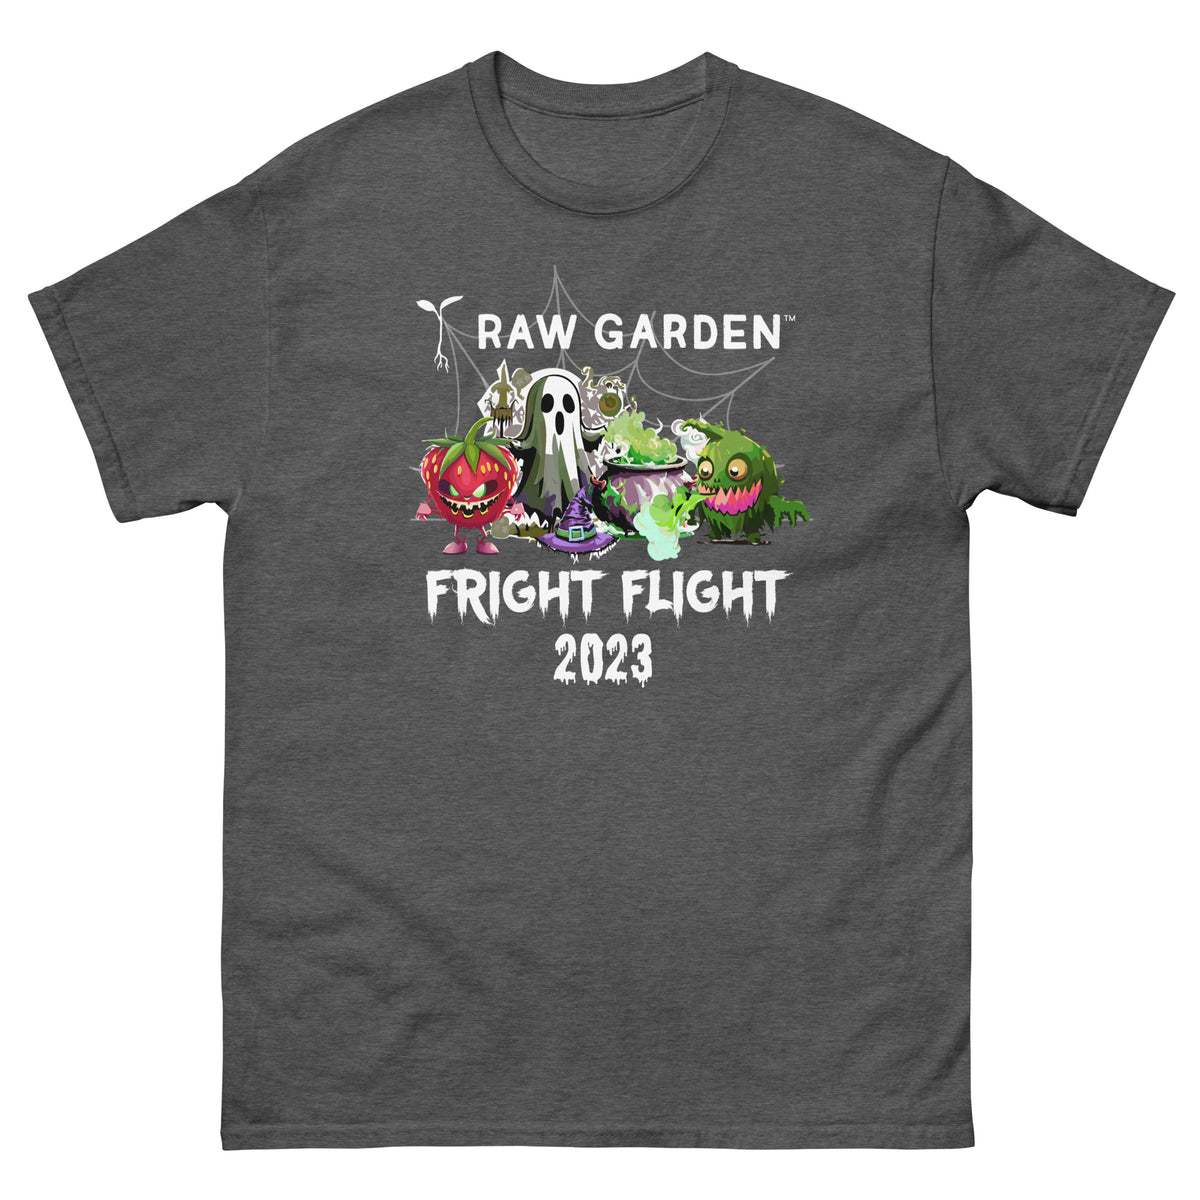 Raw Garden T-Shirt - Fright Flight